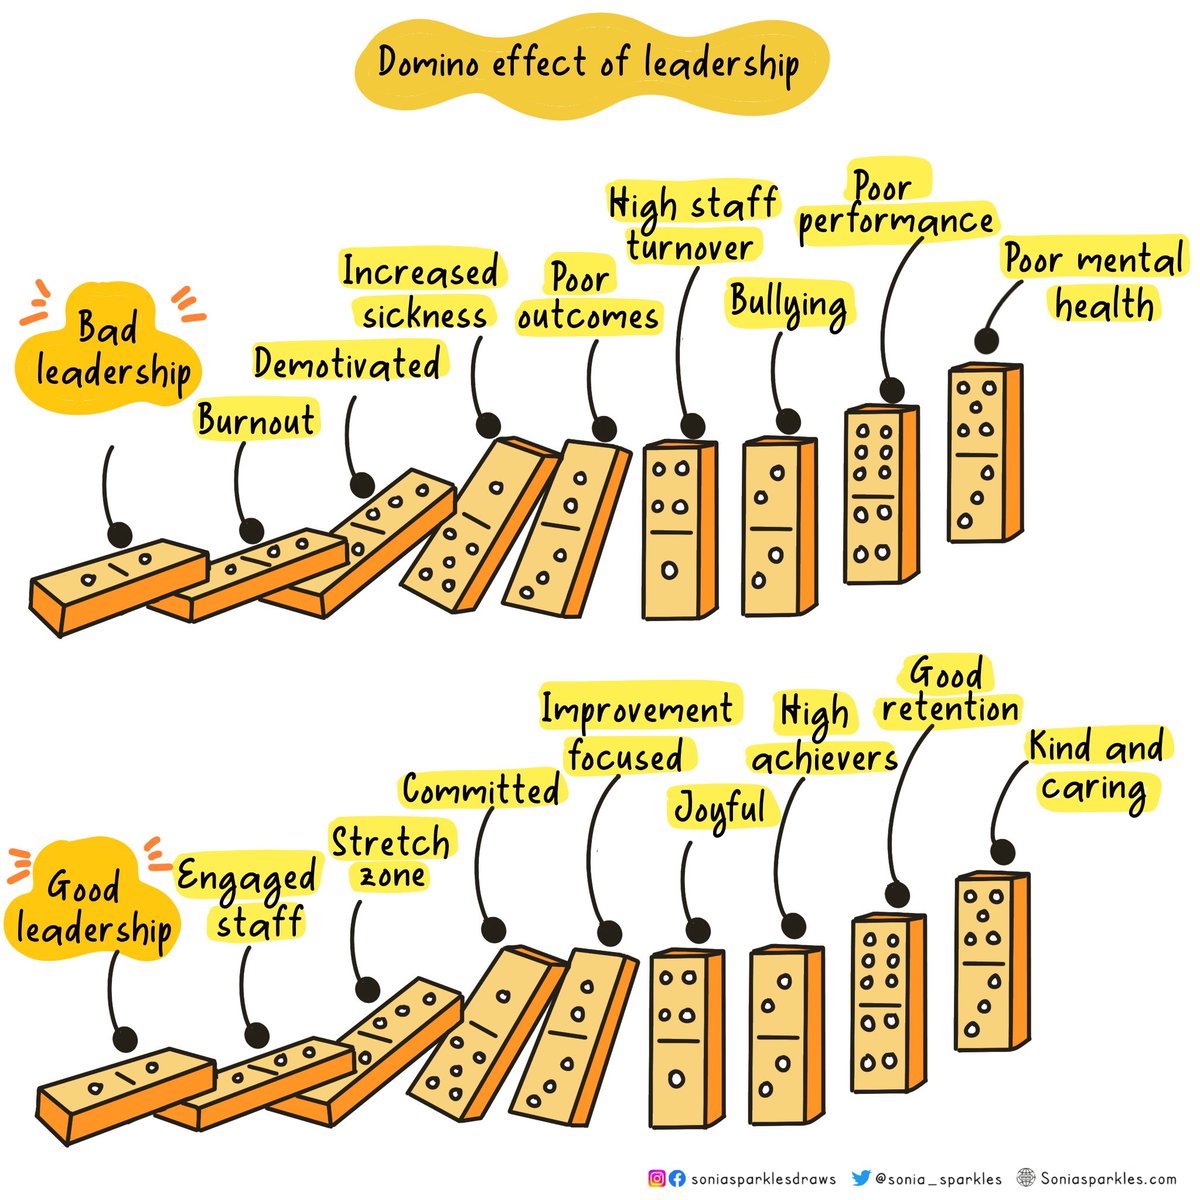 Domino effect of leadership